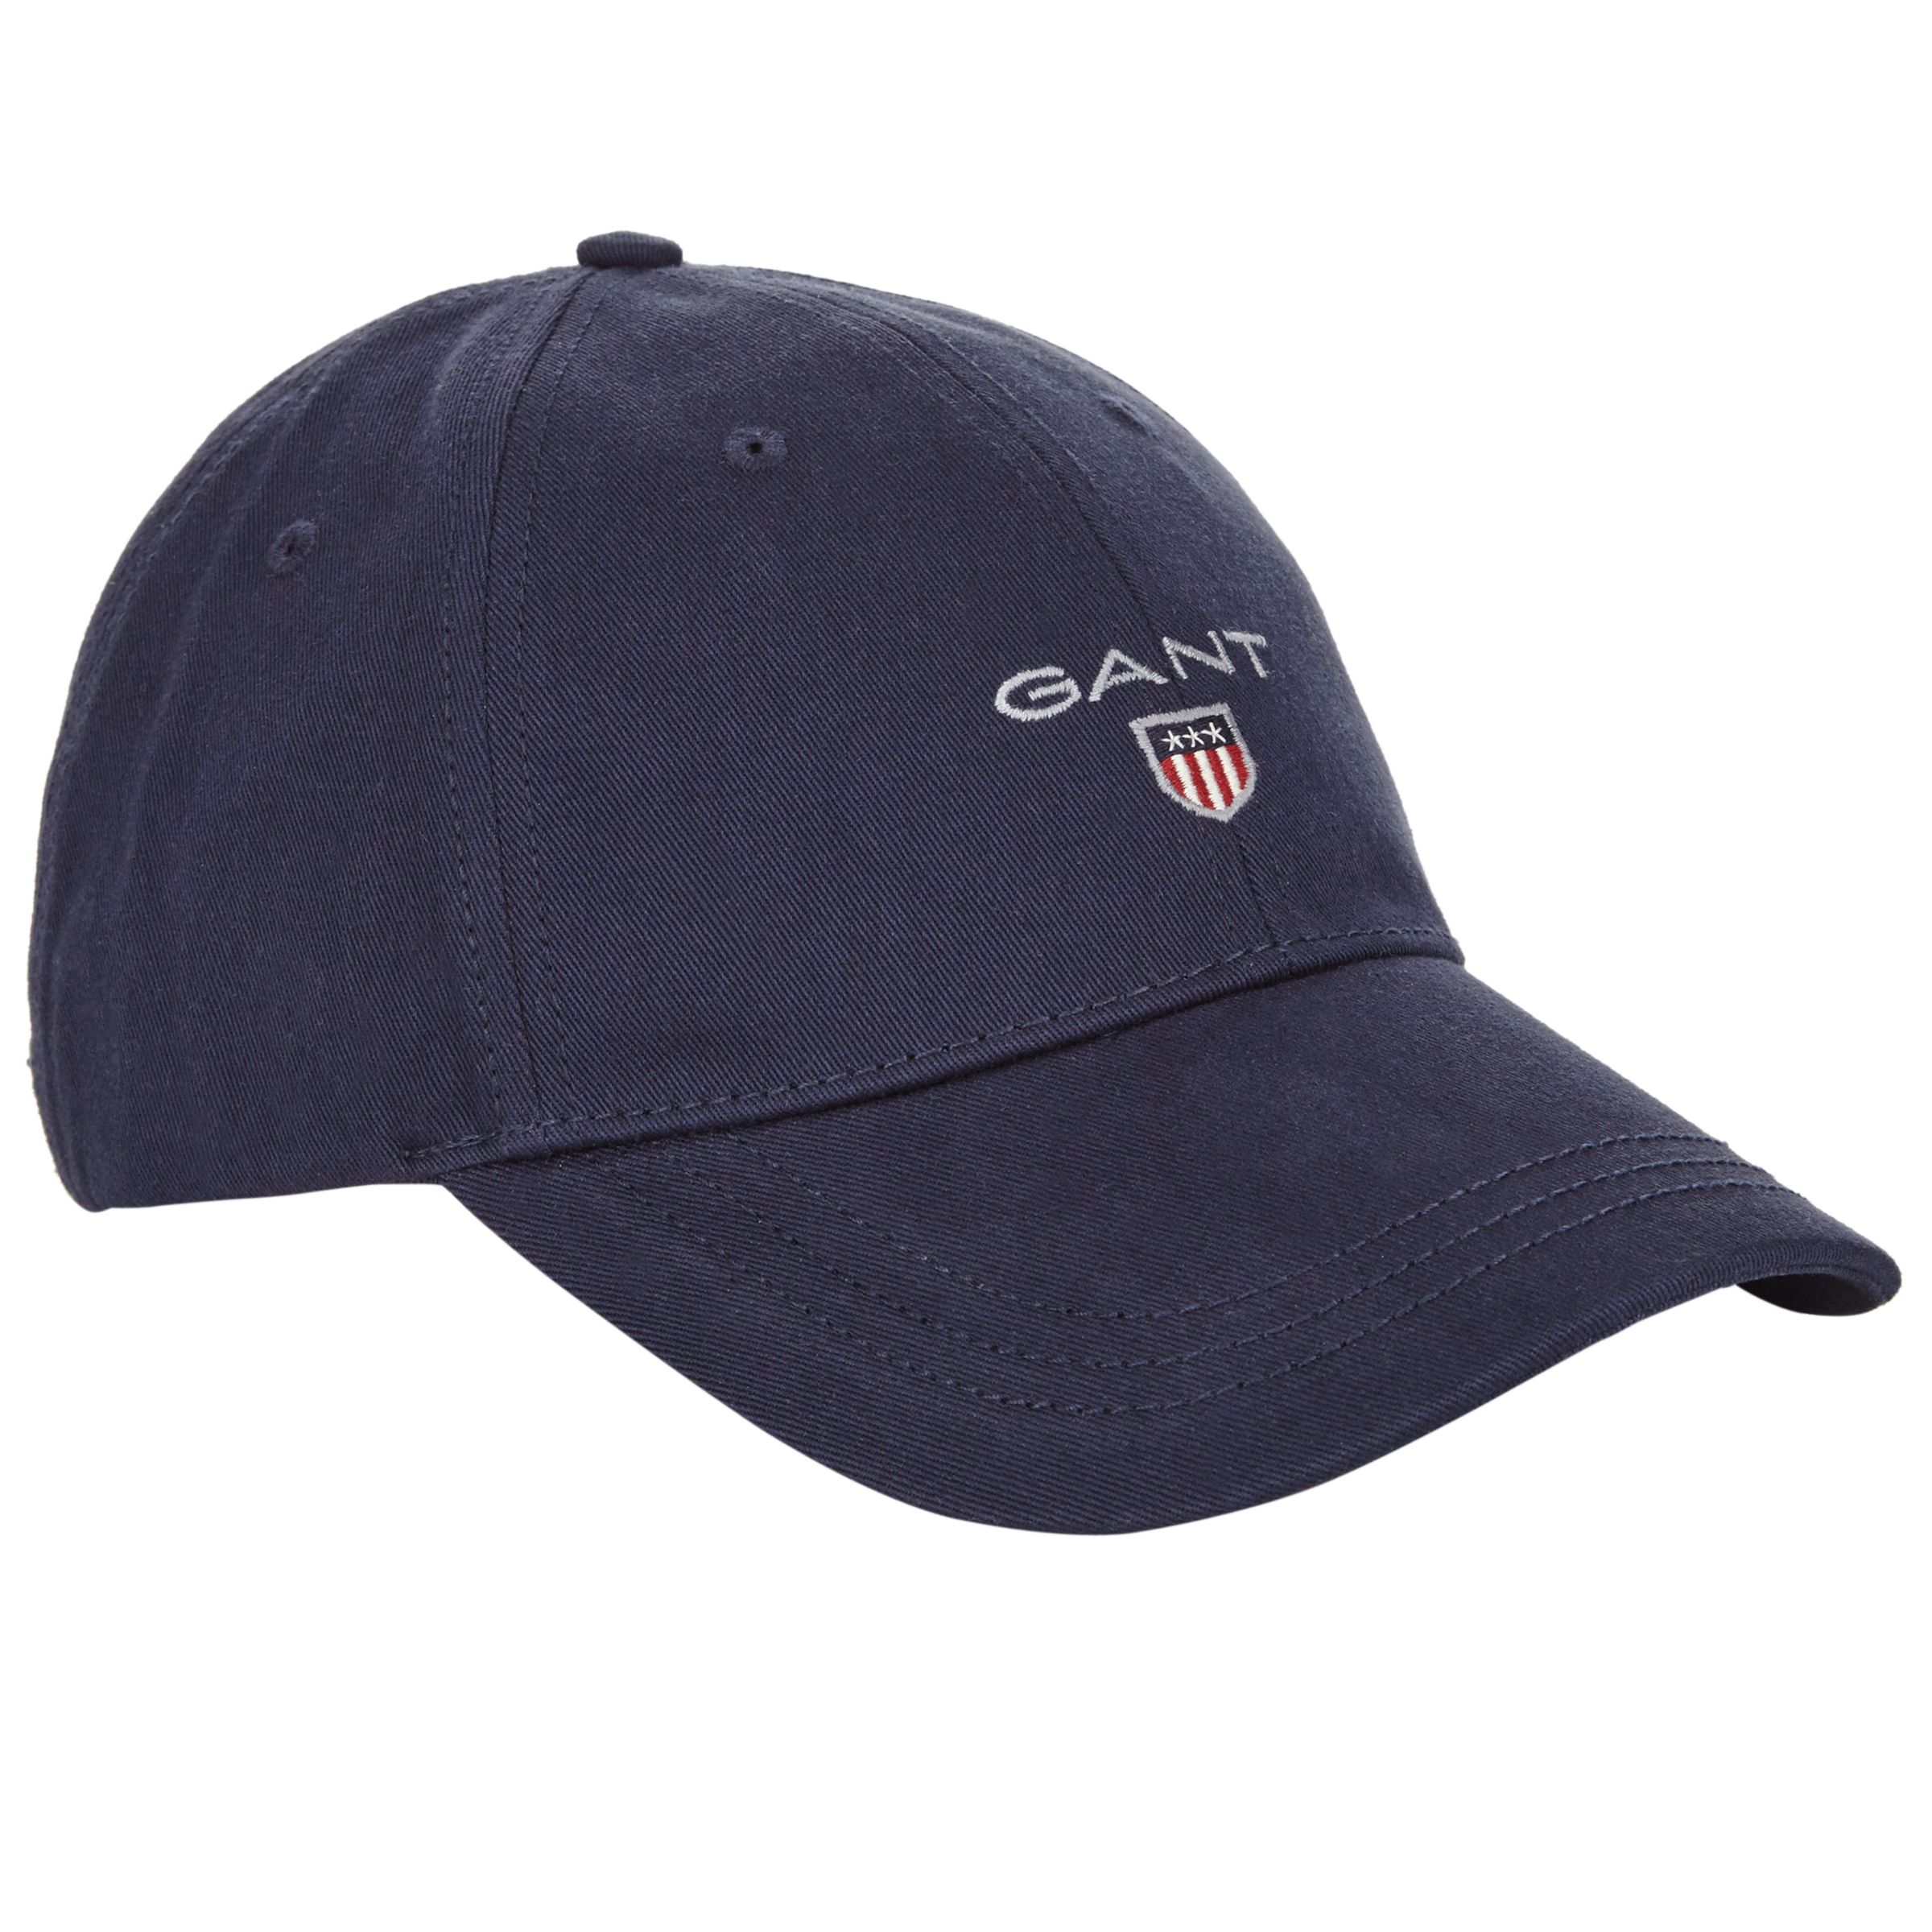 Gant Cotton Twill Baseball Cap, One Size, Navy